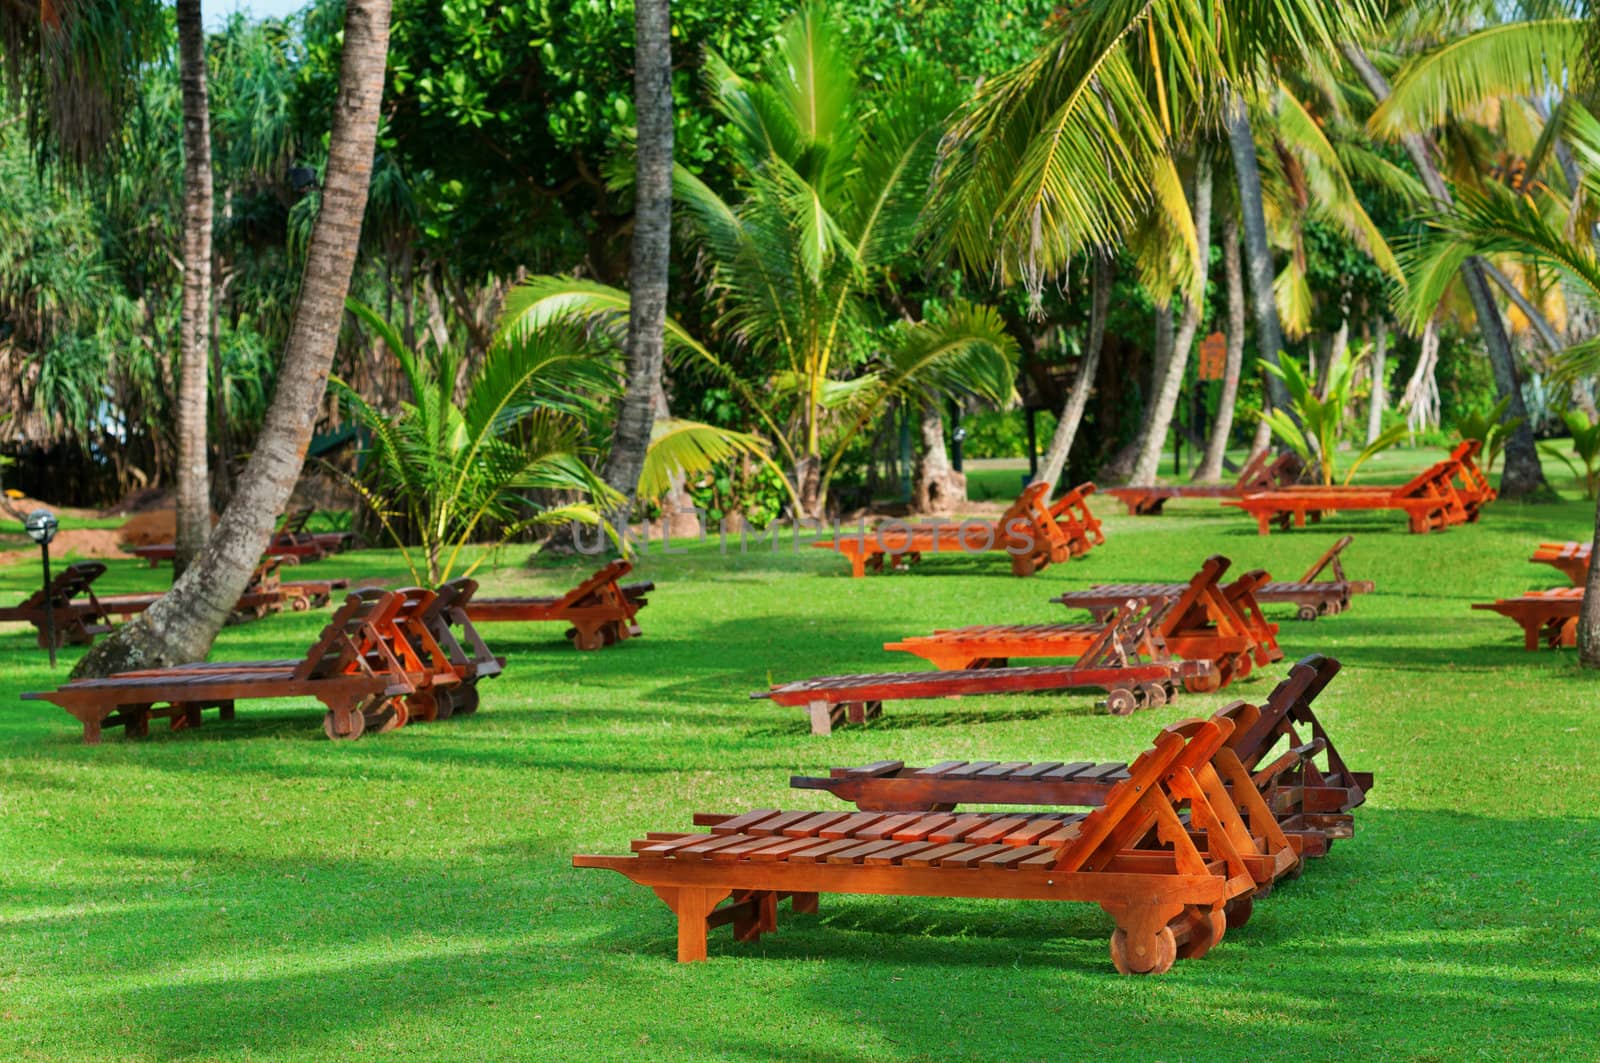 Beach beds between tropical trees on green grass